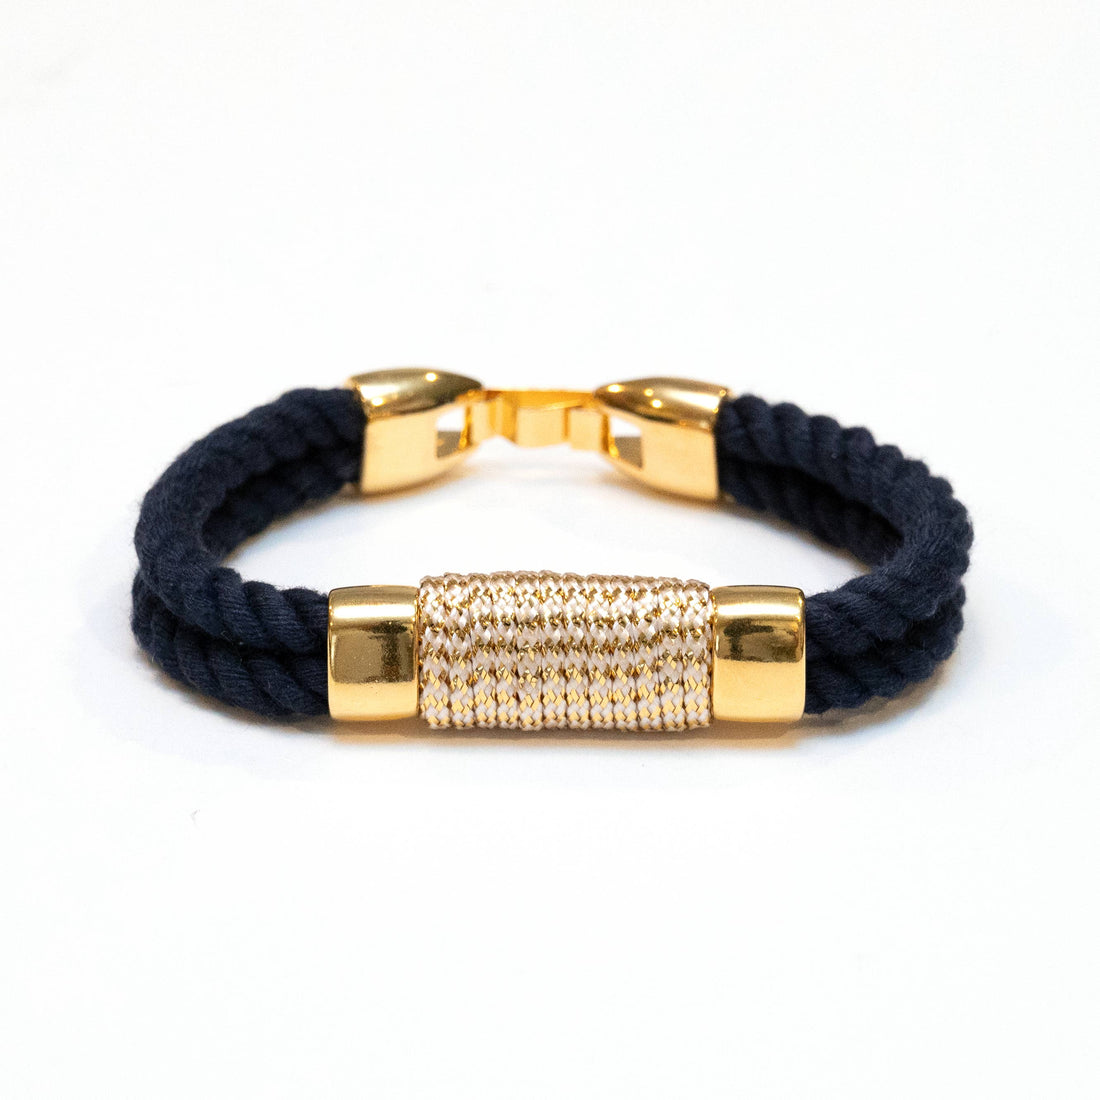 Tremont Bracelet - Navy/Metallic Gold: S